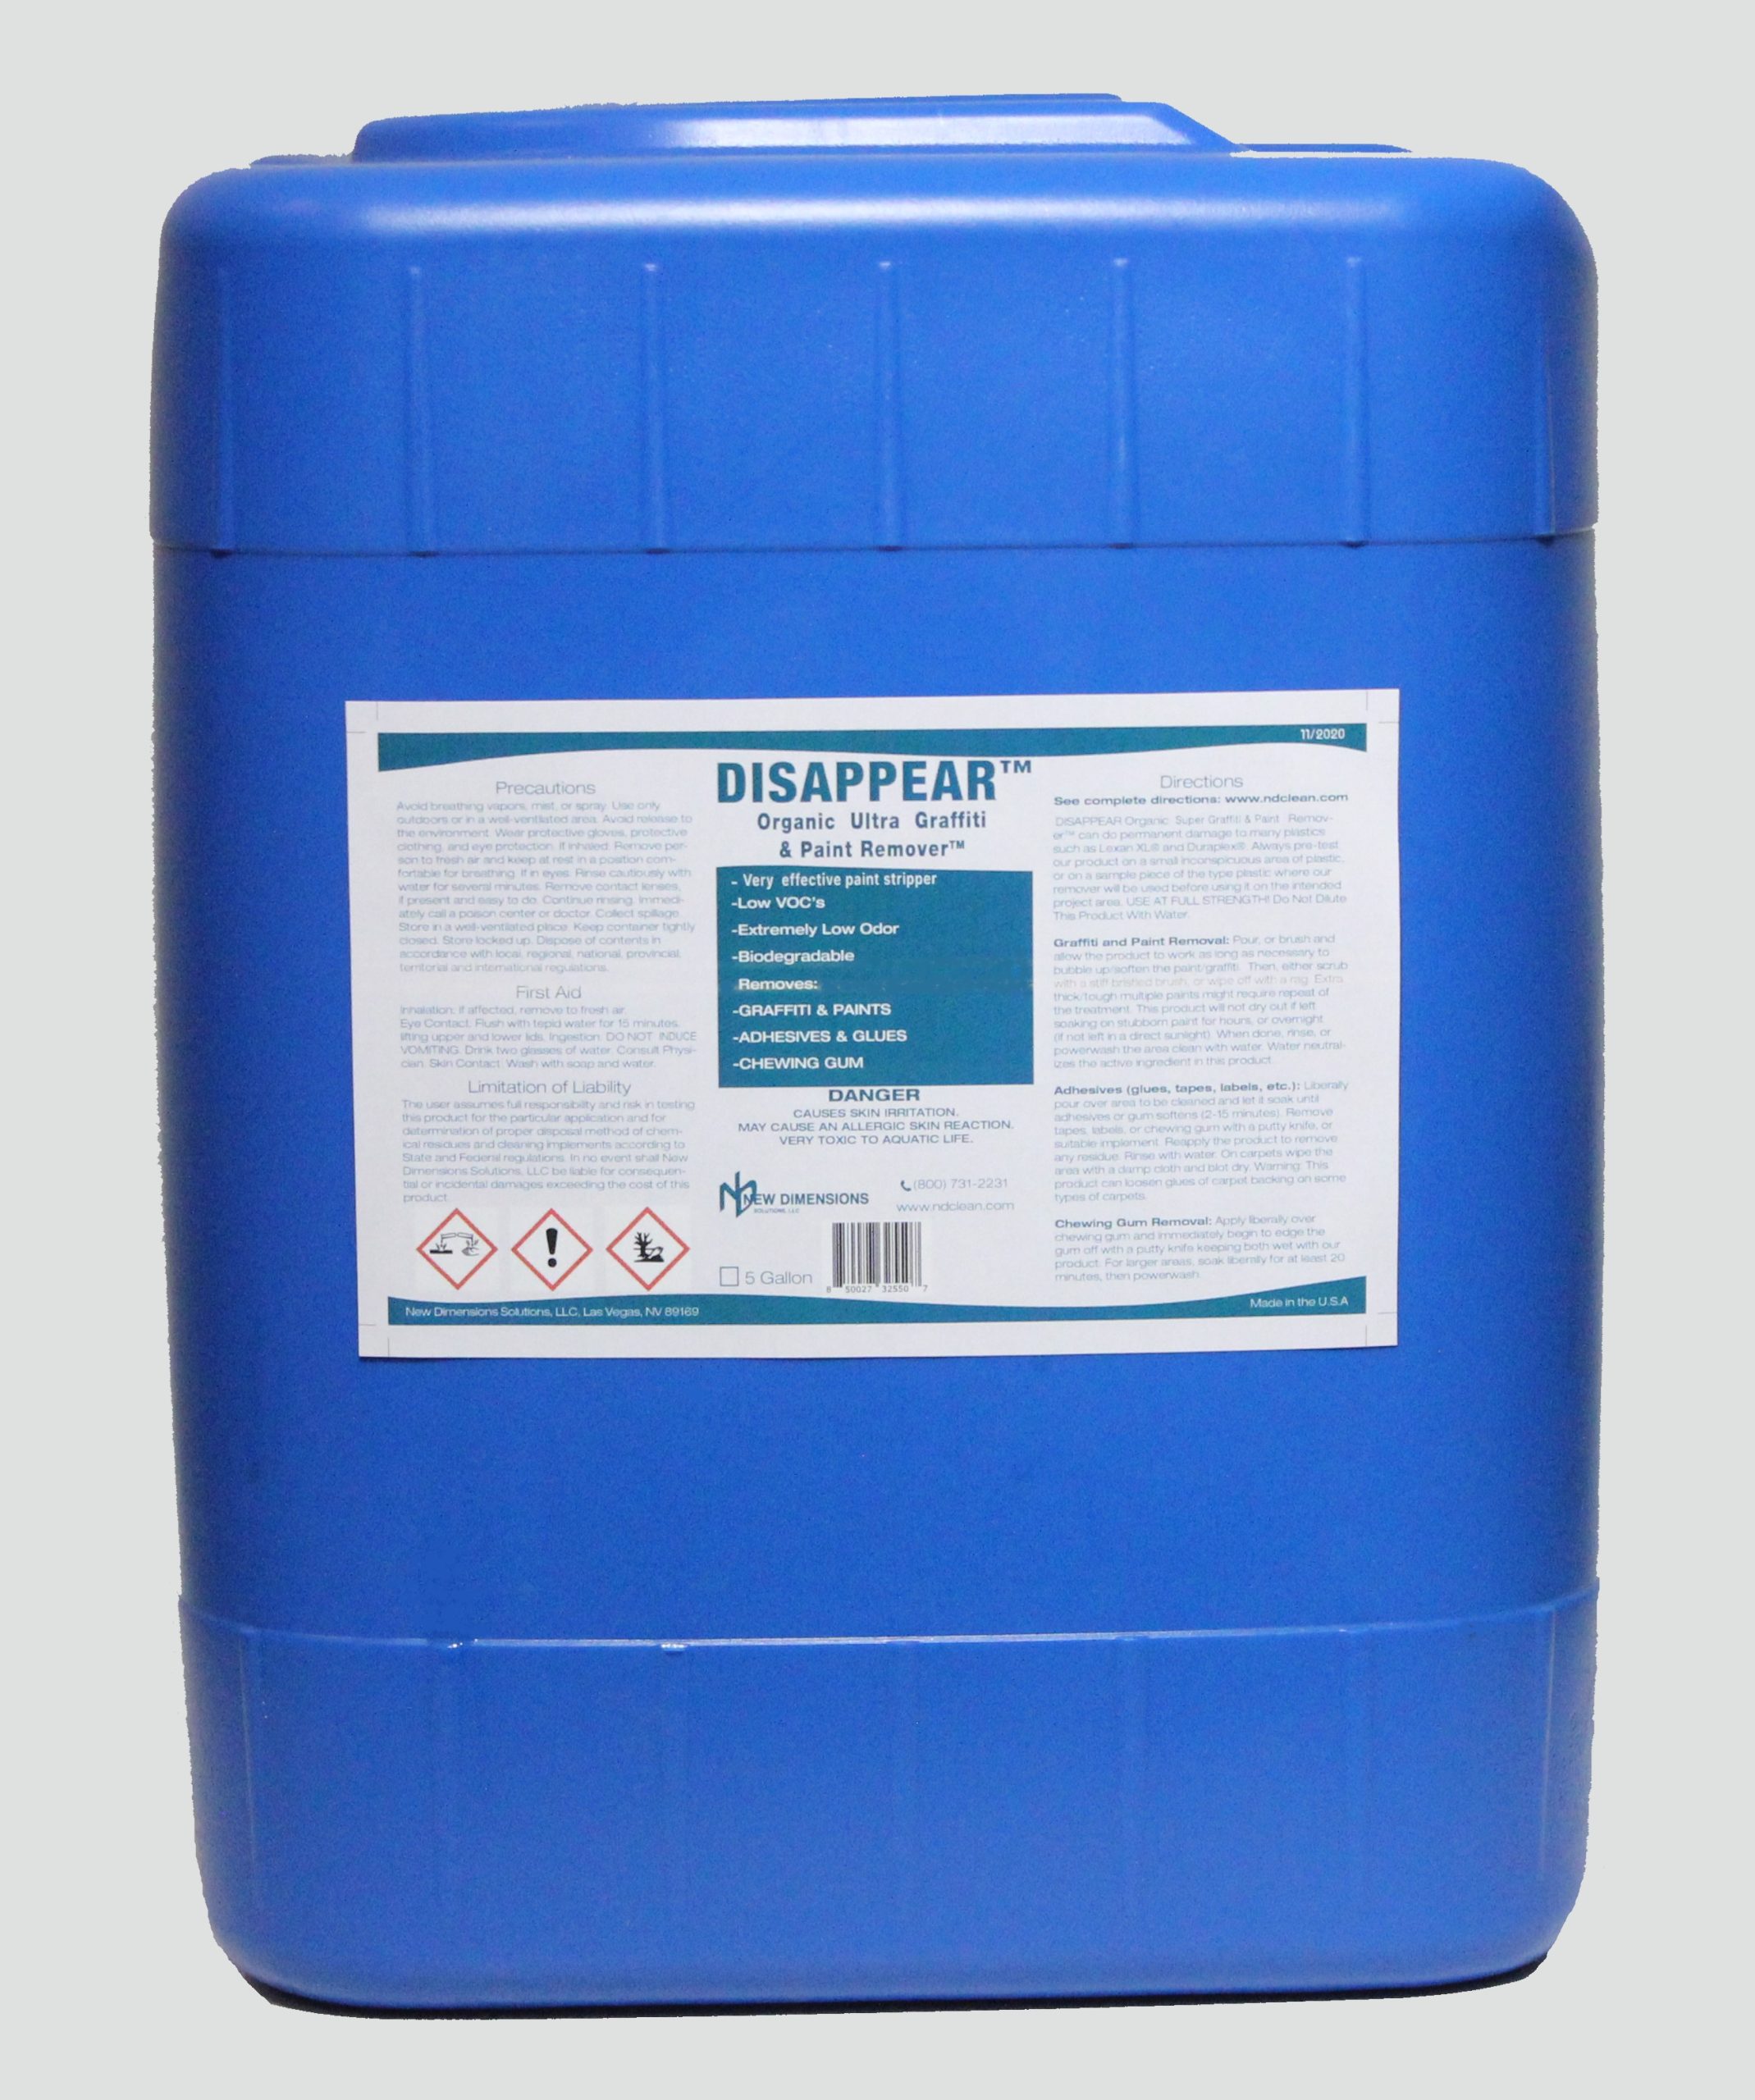 DISAPPEAR Organic Graffiti/Adhesive/Paint Remover™ - 5-Gallon Pail